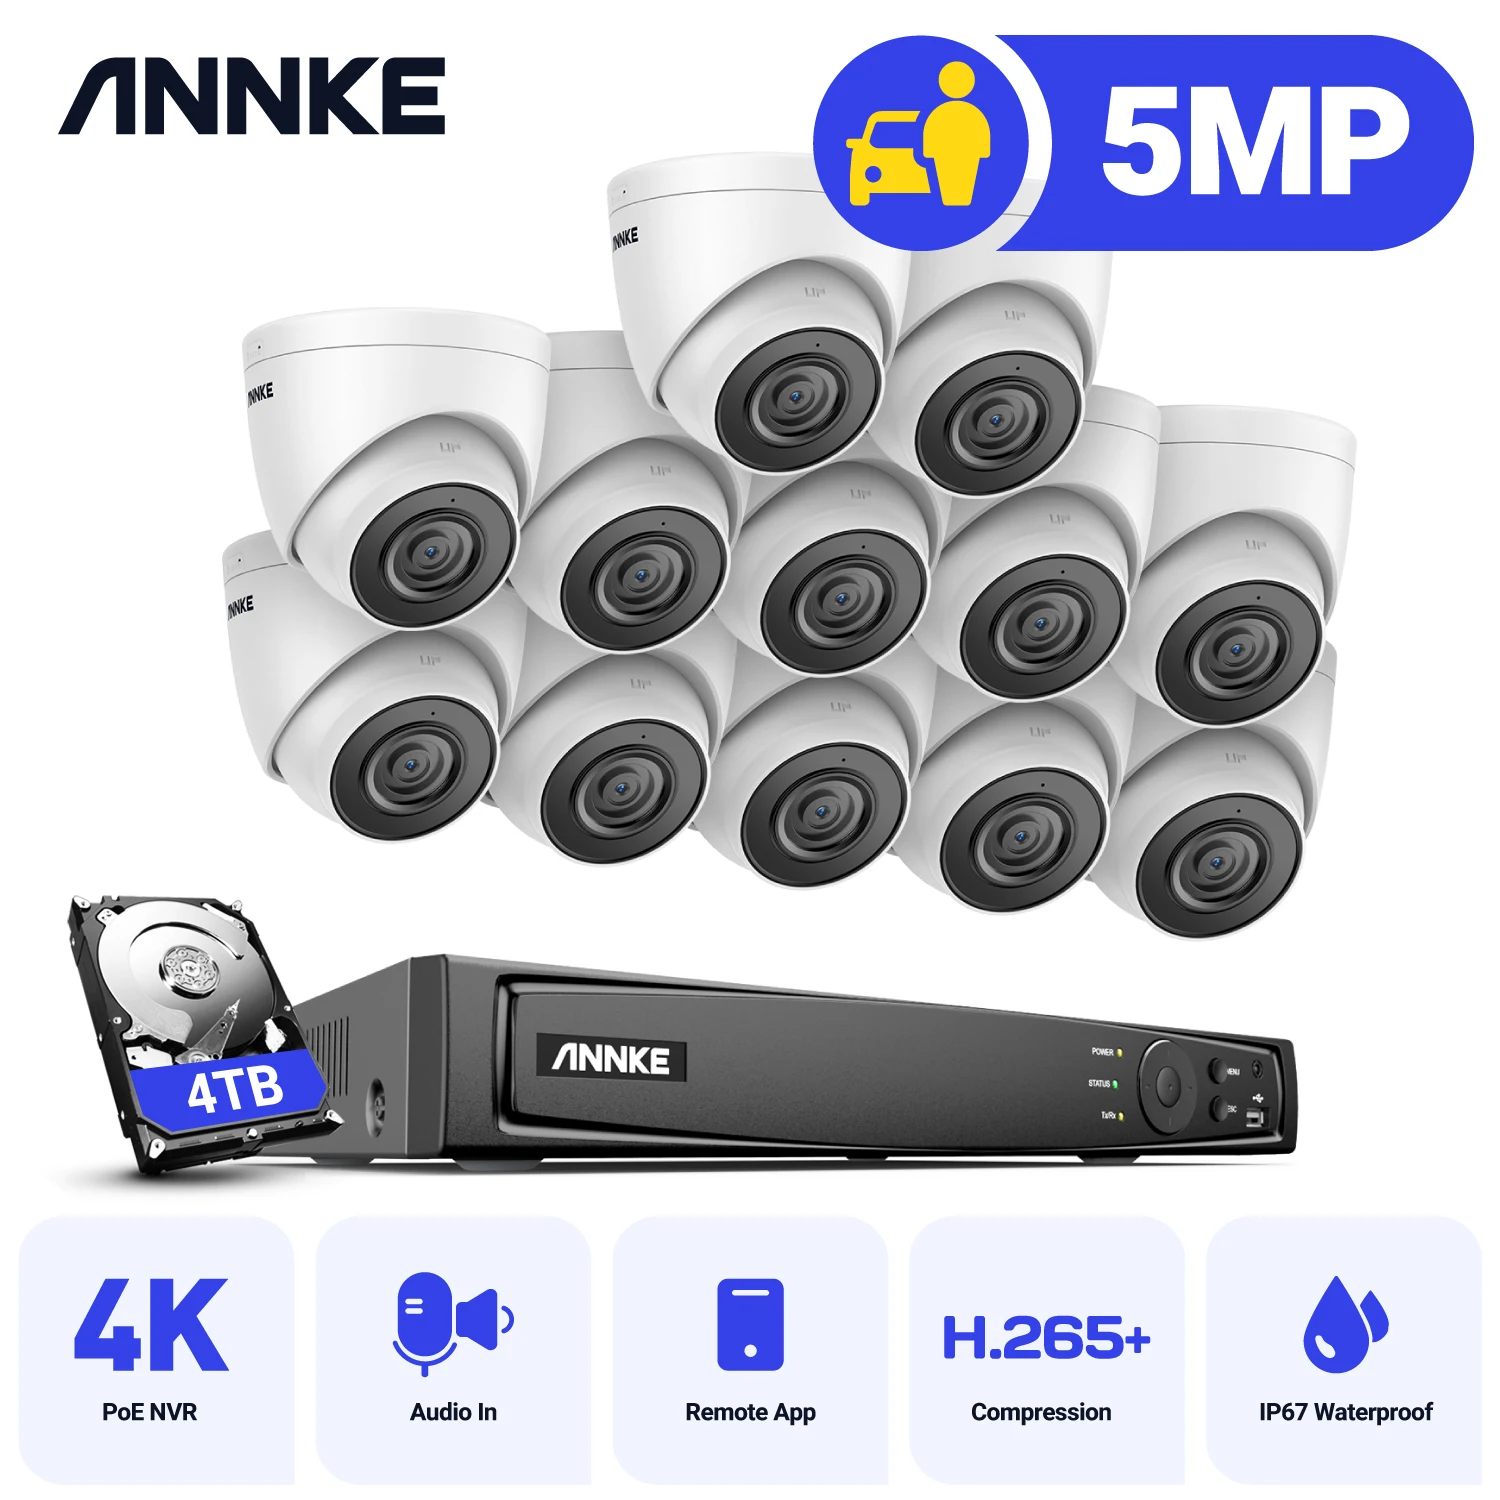 ANNKE 5MP FHD POE Система Видеонаблюдения 16CH H.265 + 4K NVR Рекордер 5MP Камеры Безопасности Аудиозапись 5MP PoE Ip-камера